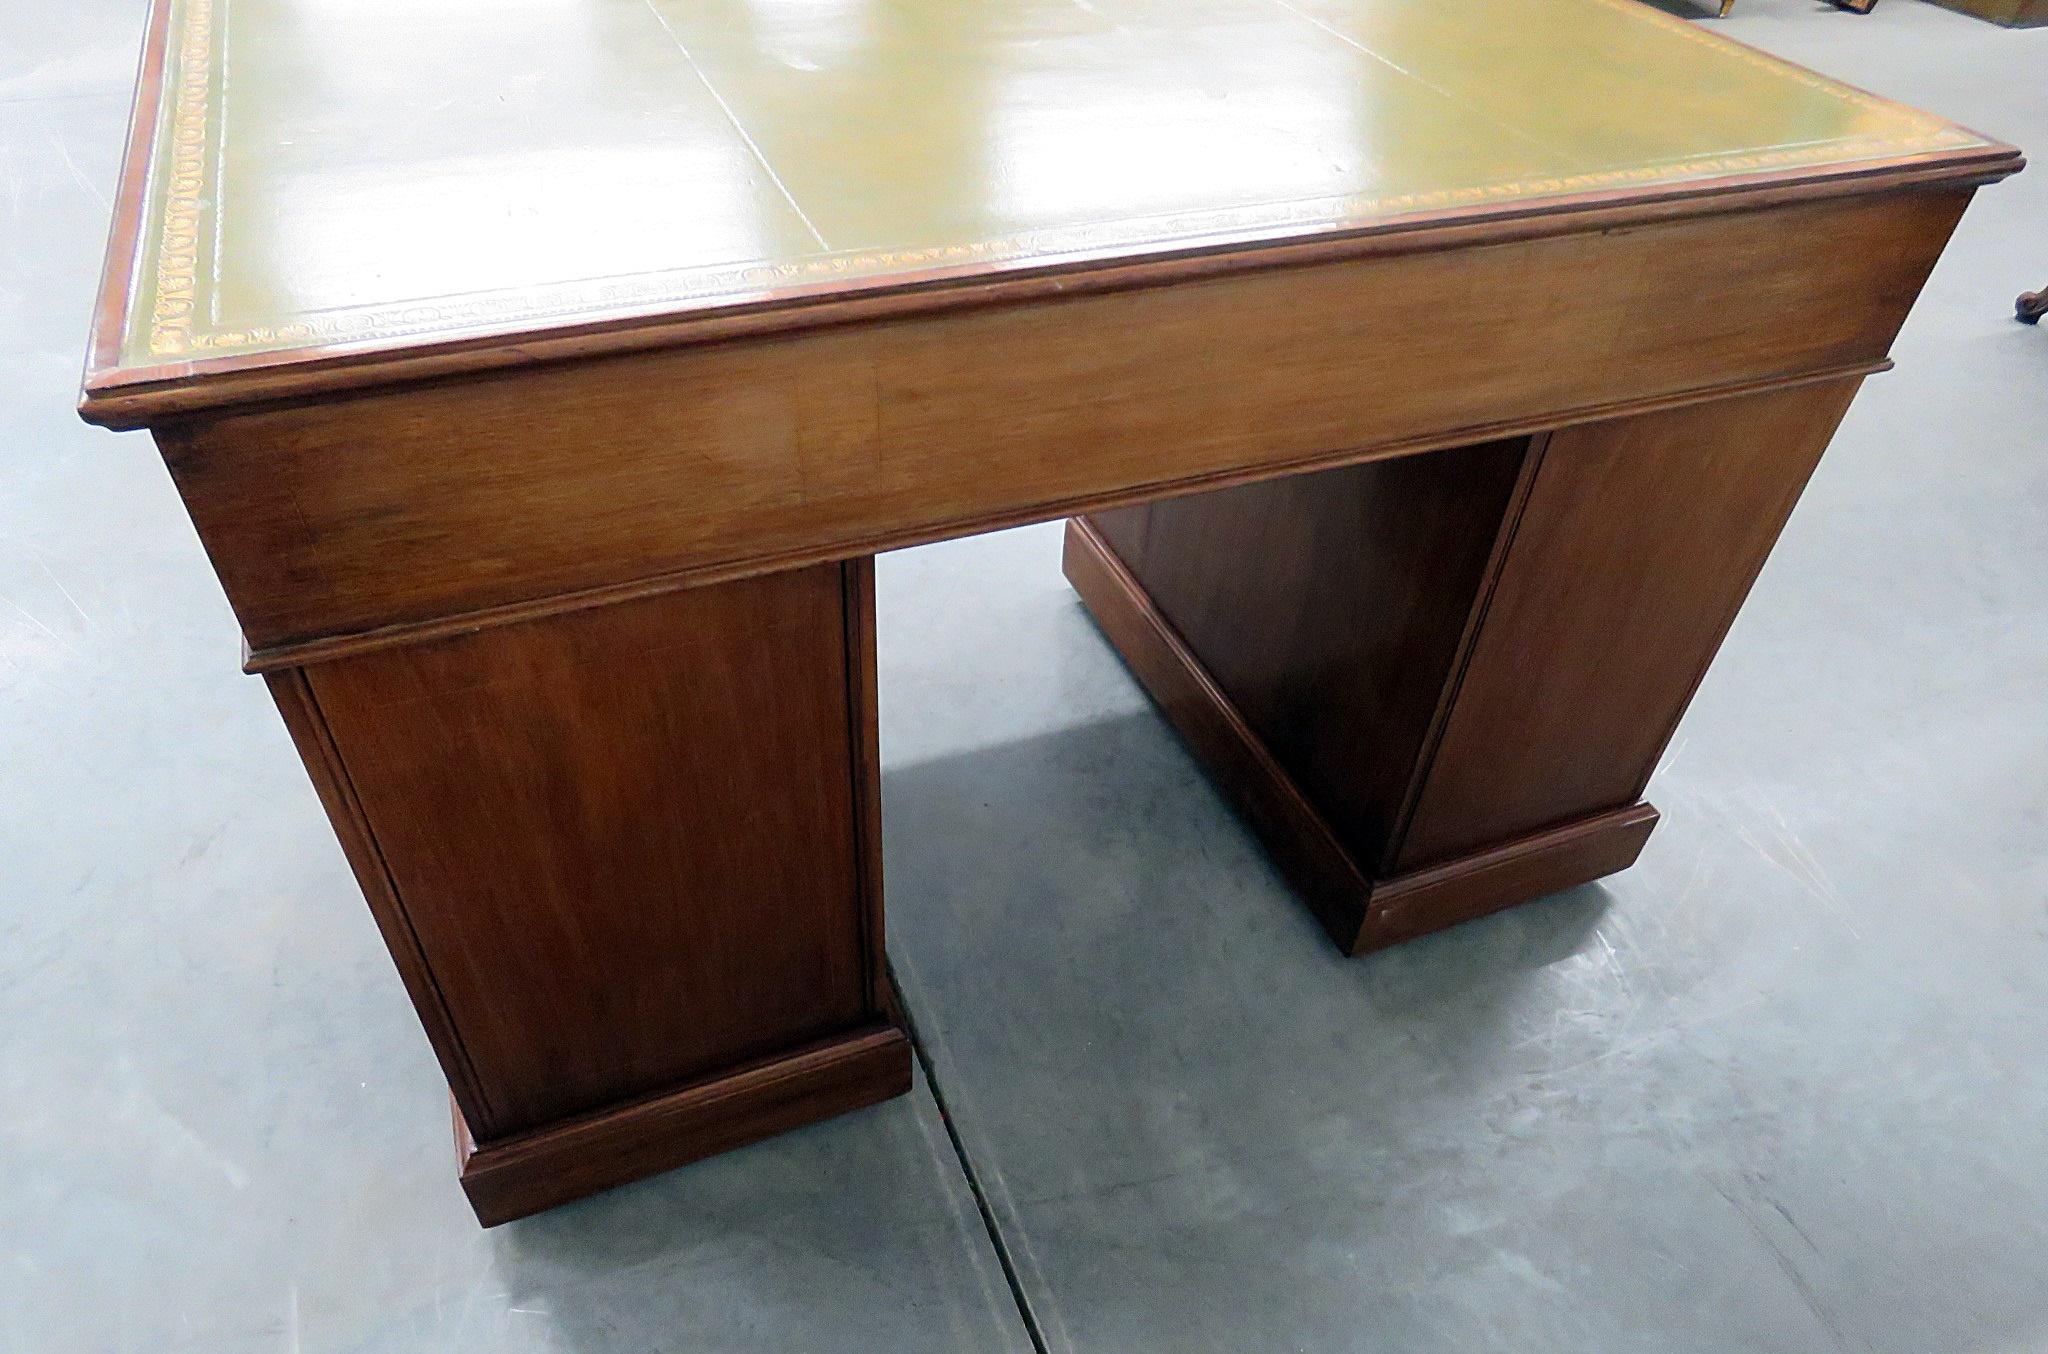 Antique Inlaid Leather Top Desk 2